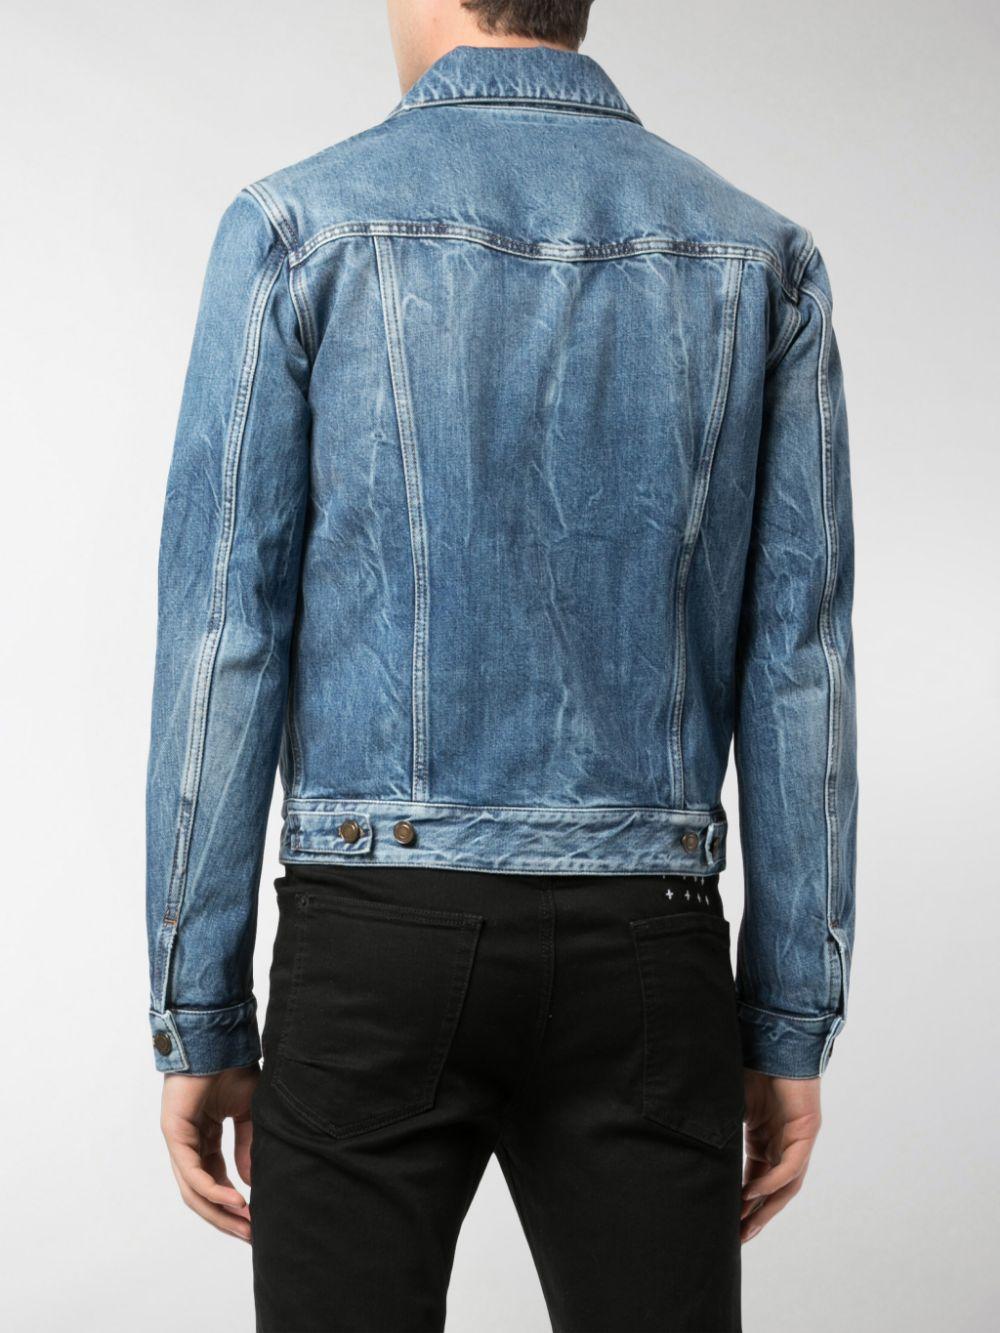 Saint Laurent Crease Effect Denim Jacket in Blue for Men - Lyst